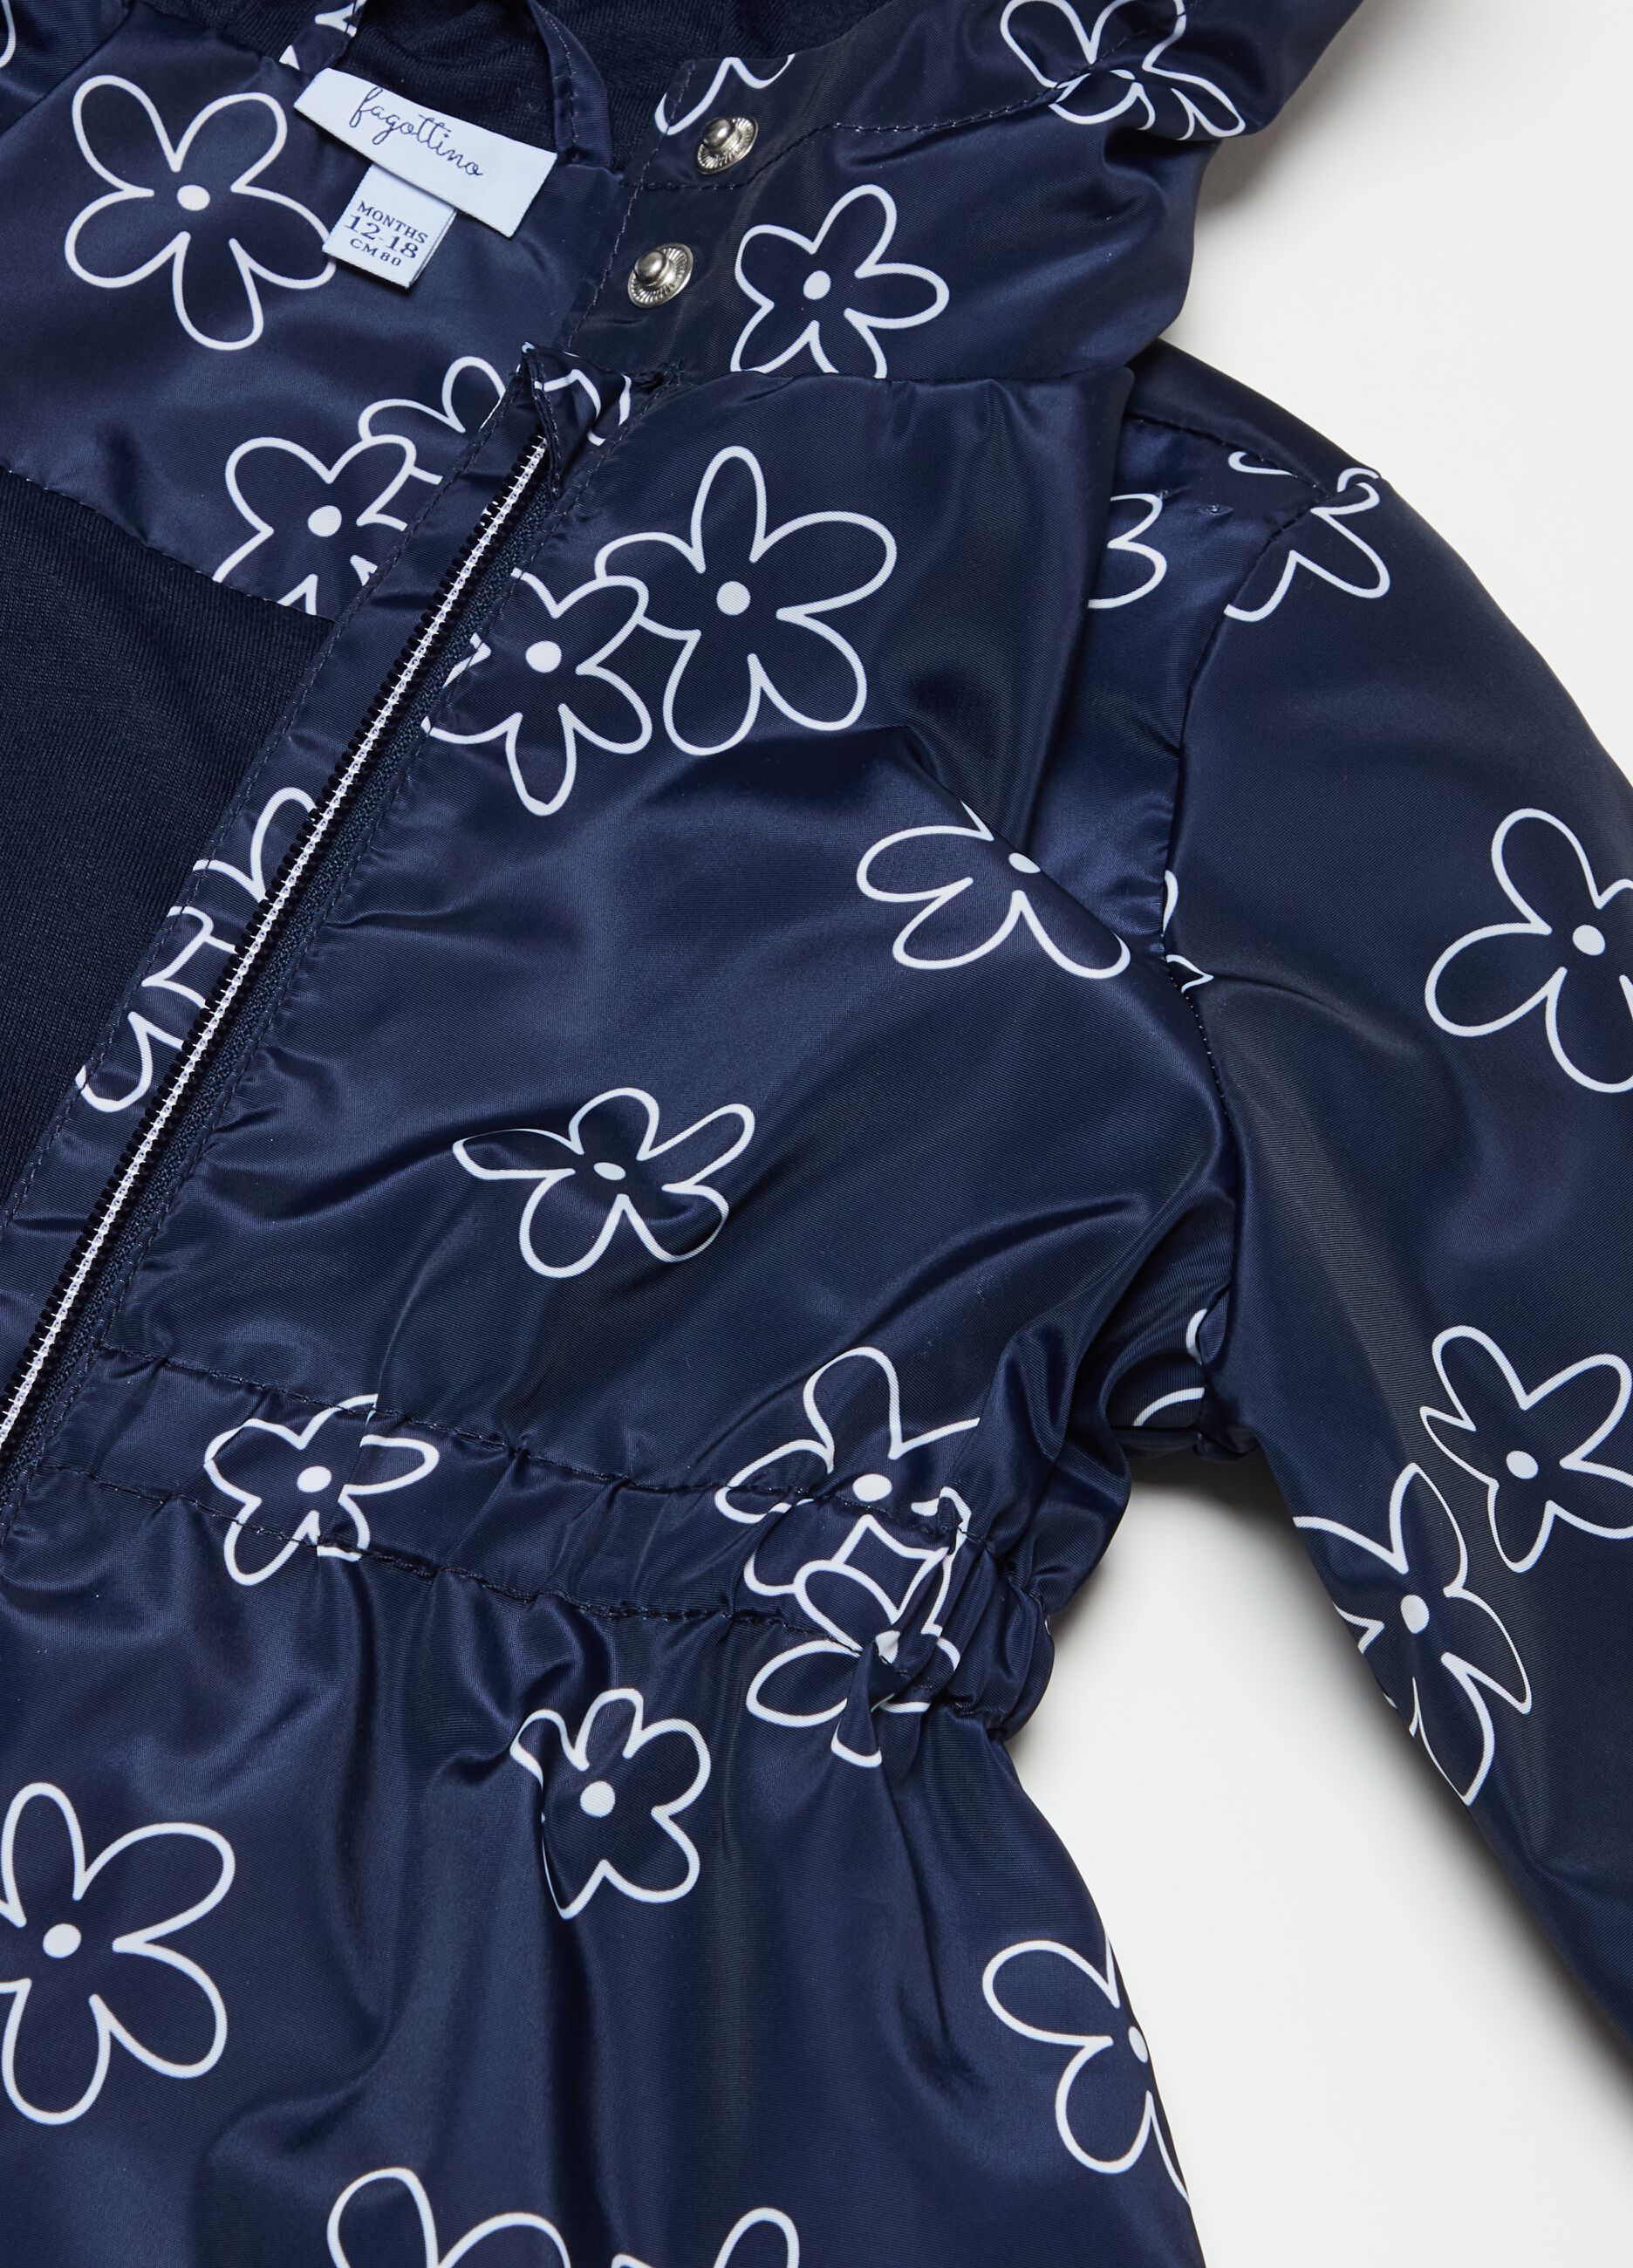 Pea coat with flowers print